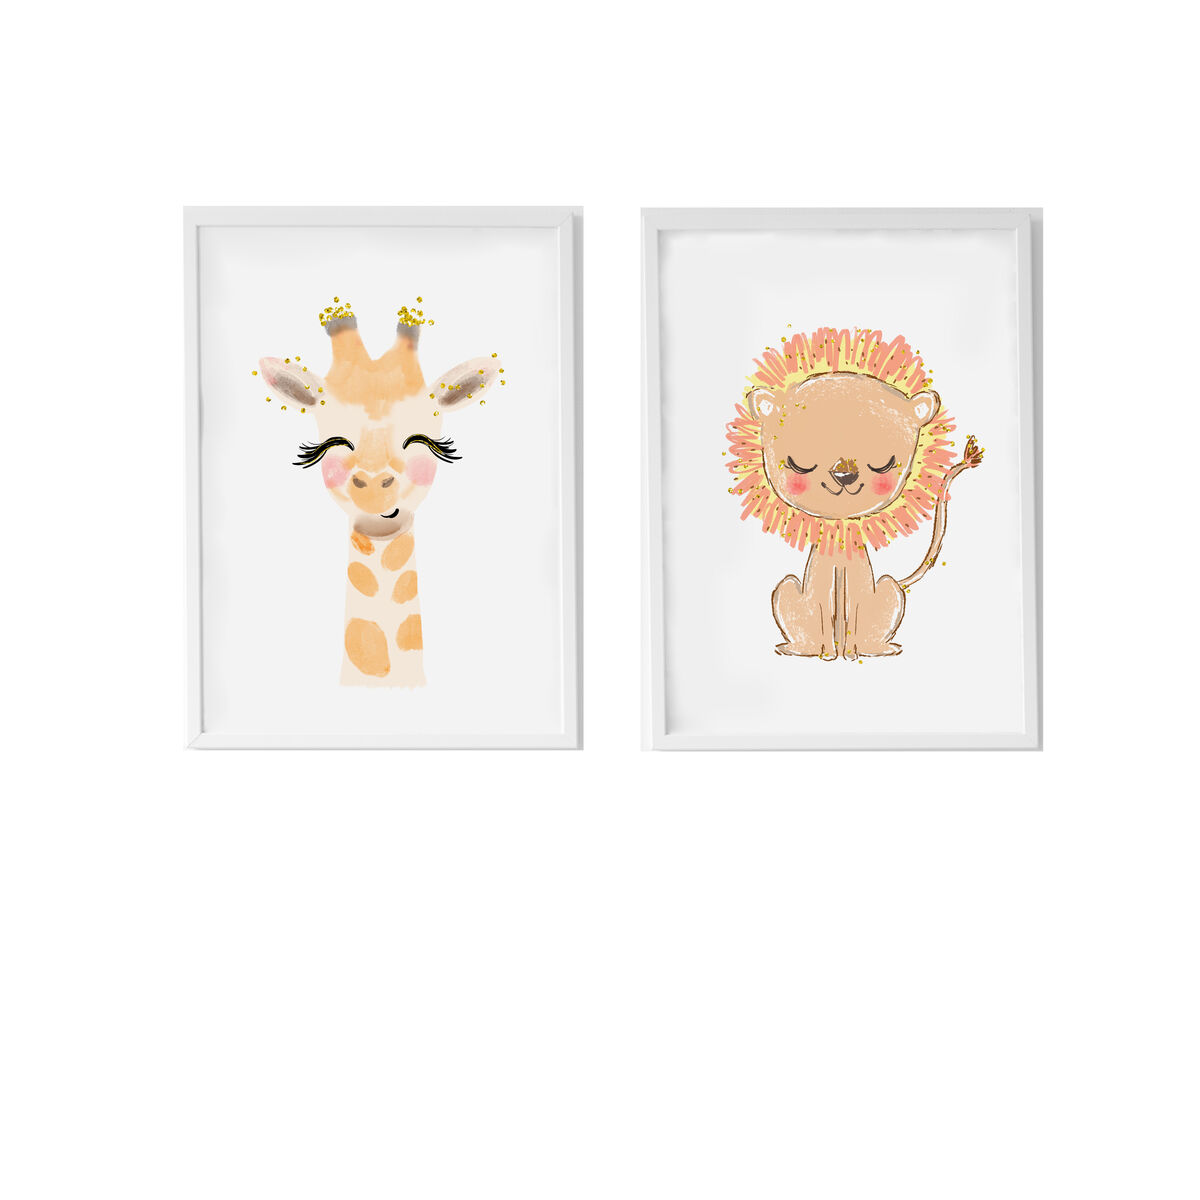 Feuilles Crochetts 33 x 43 x 2 cm Lion Girafe 2 Pièces